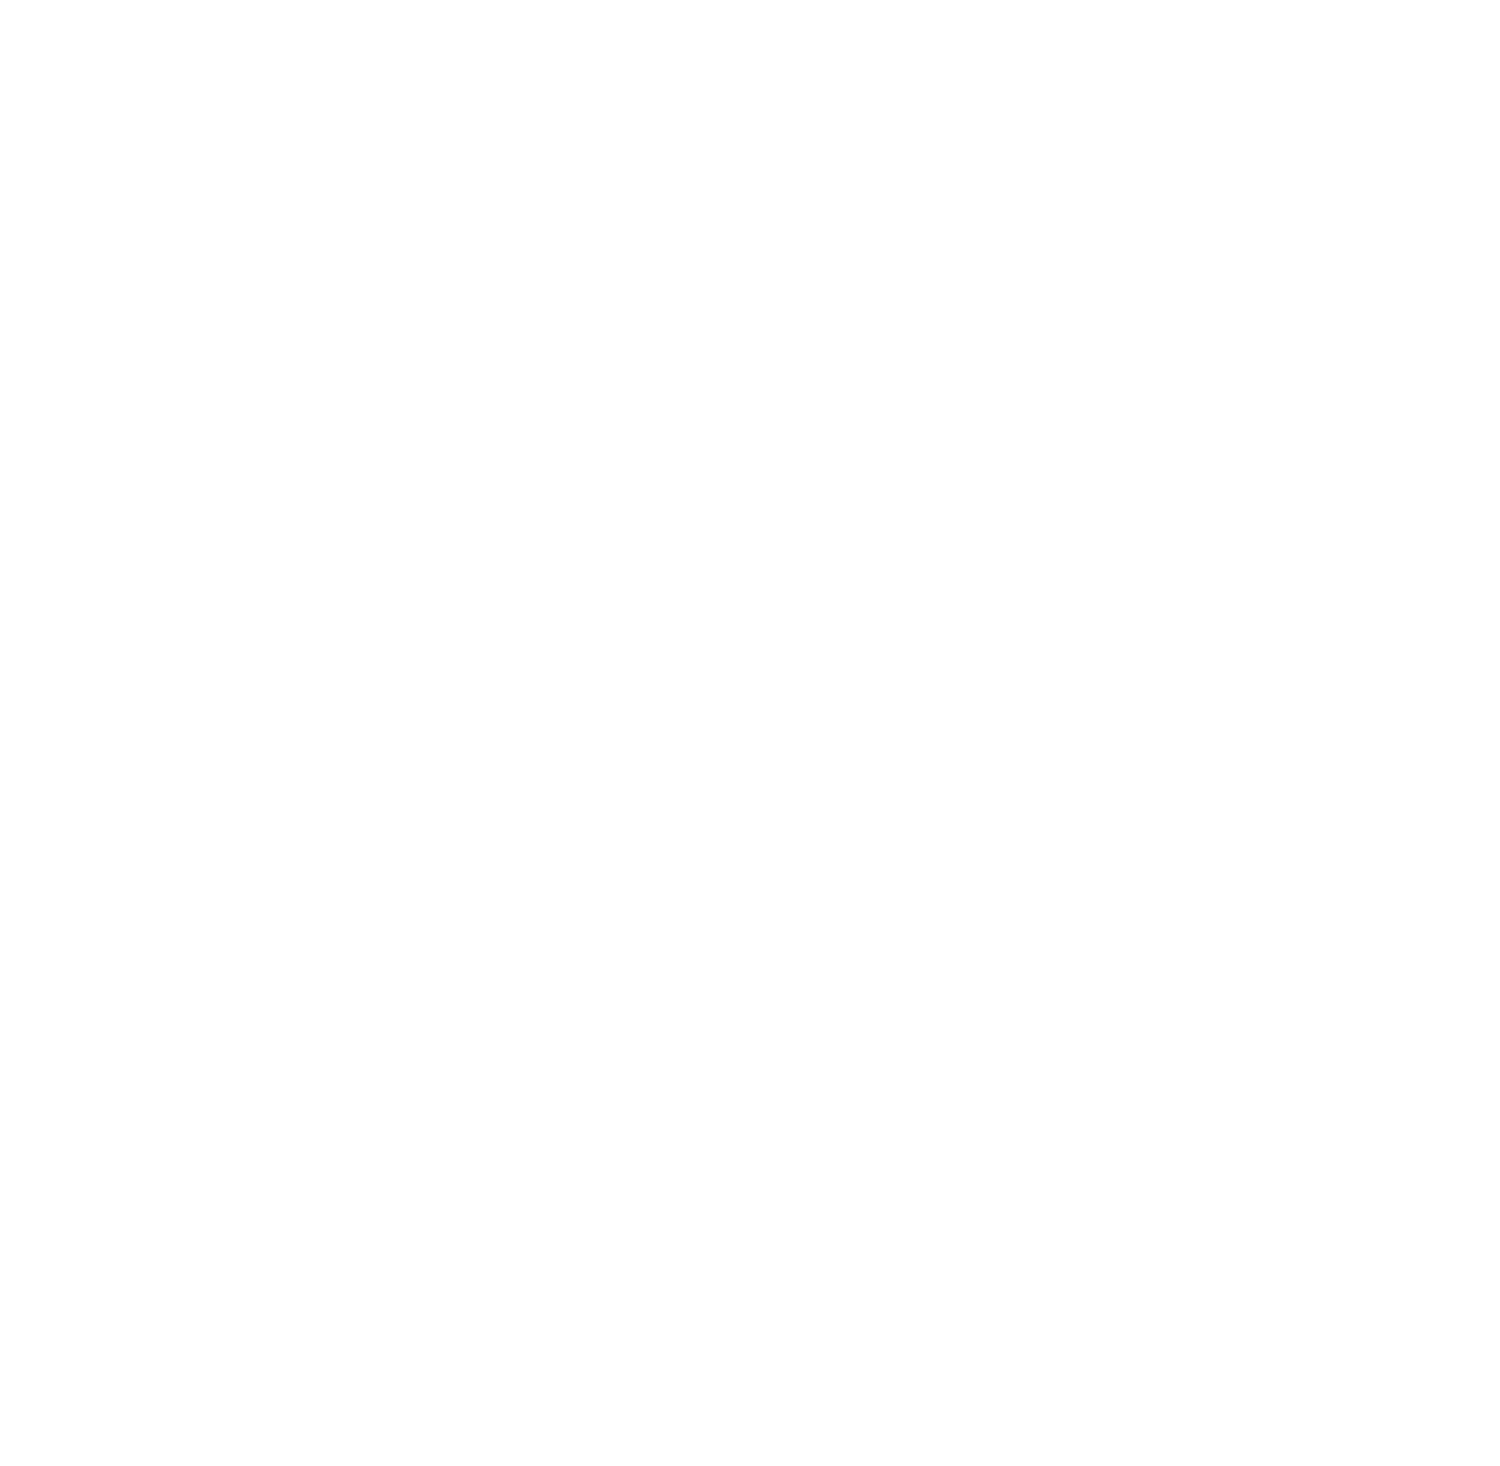 Virginia Society of Ornithology